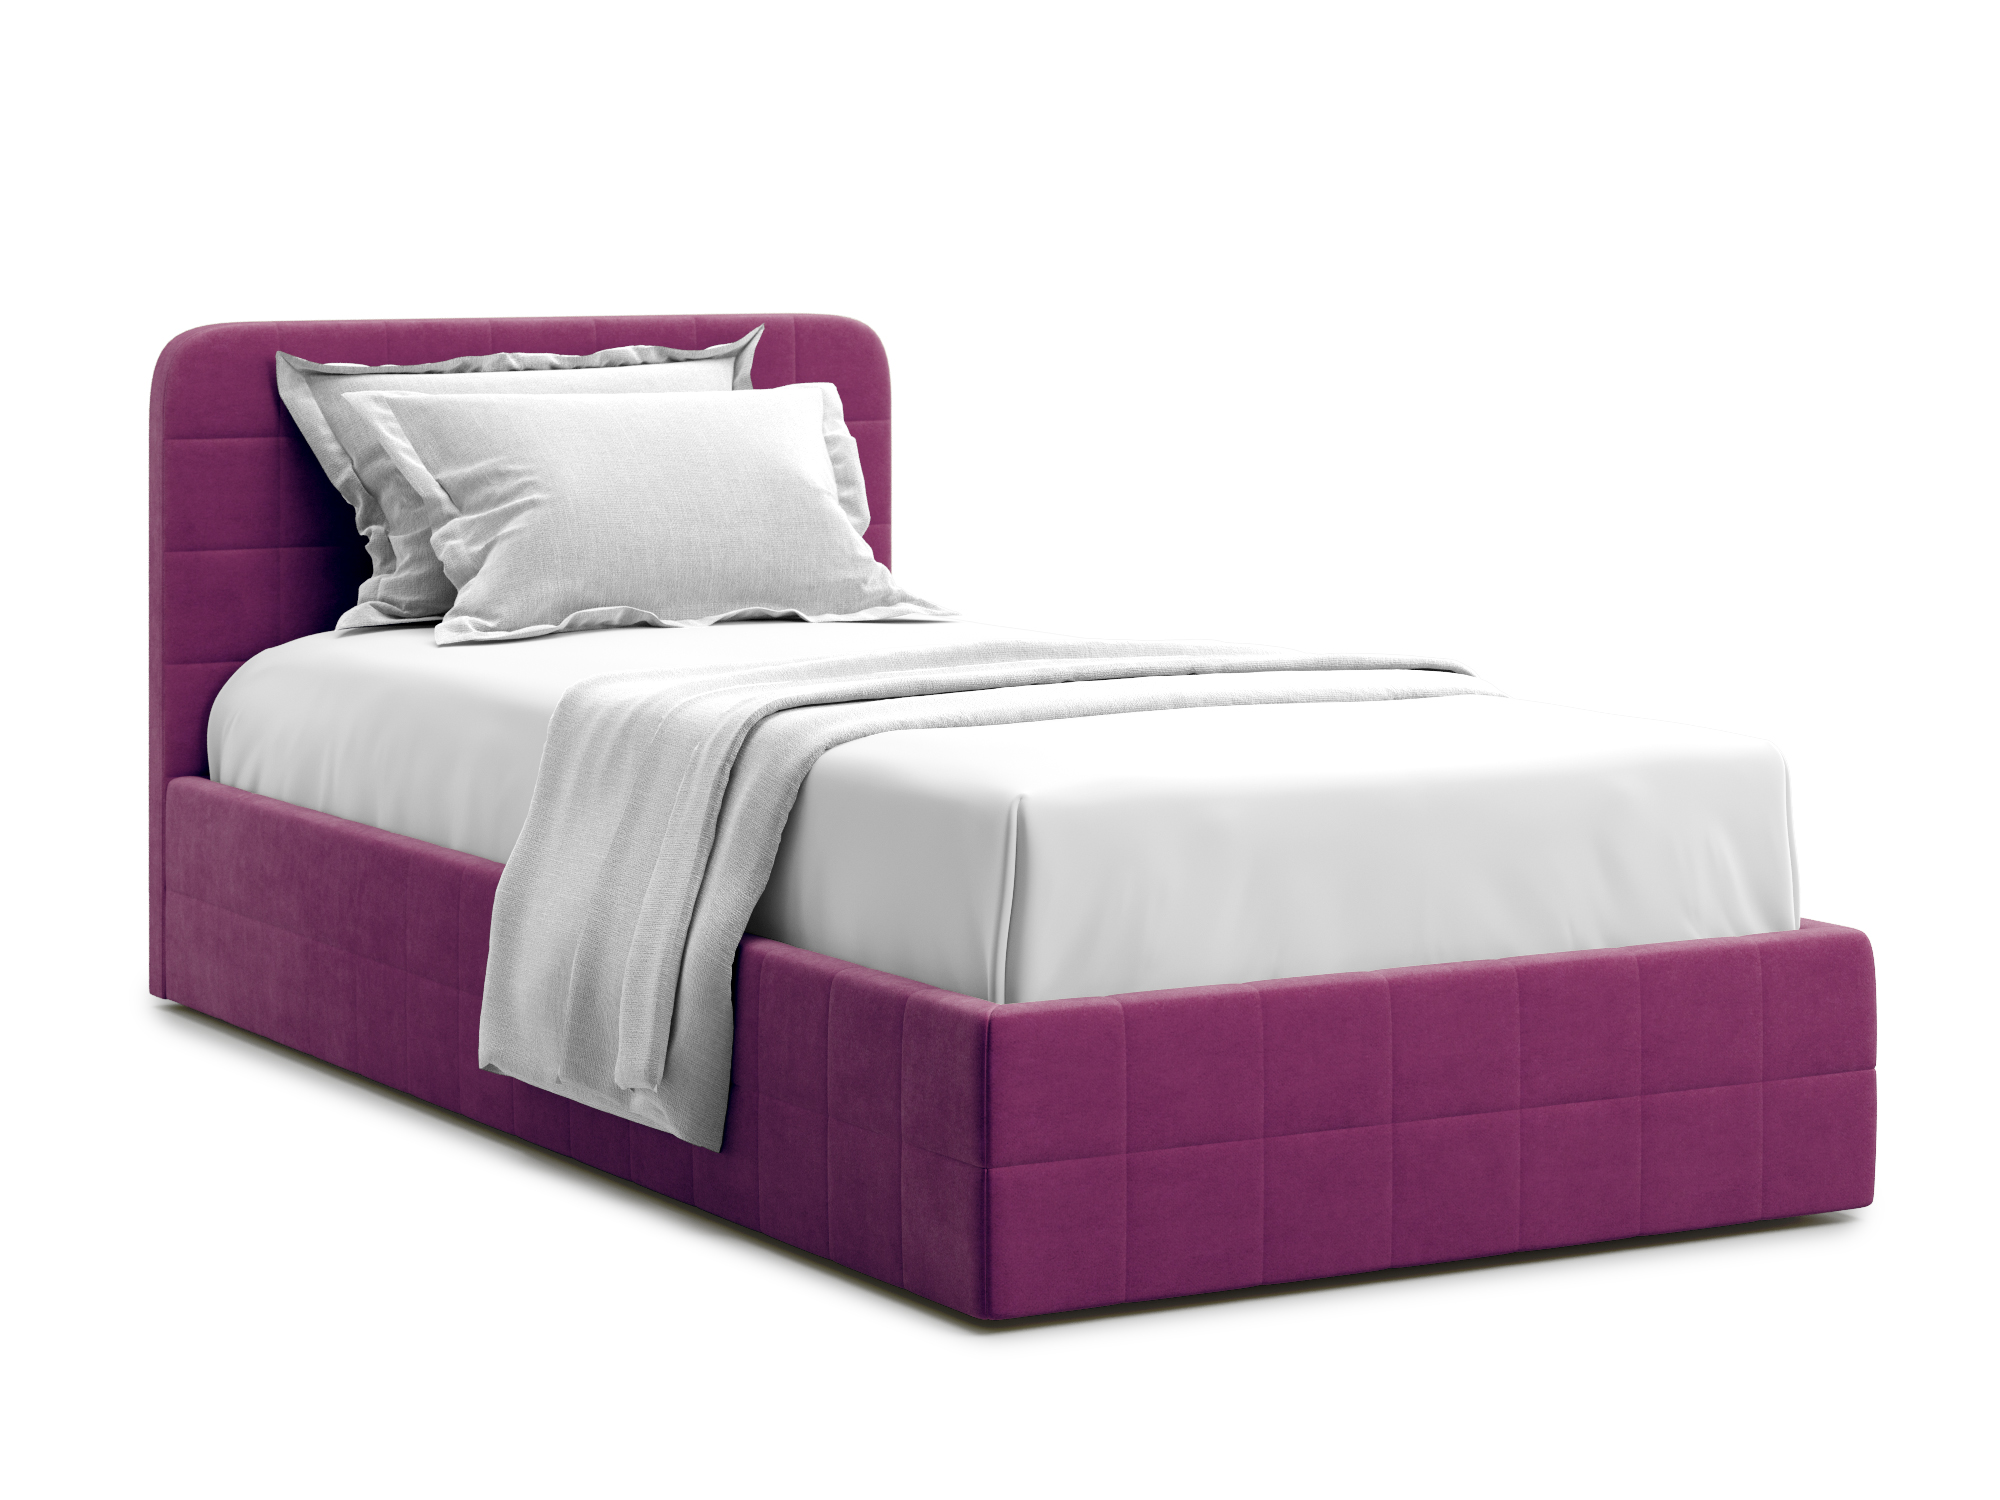 Кровать Adda 120 Velutto 15 Фиолетовый, Массив, ДСП кровать adda 90 velutto 17 бежевый массив дсп